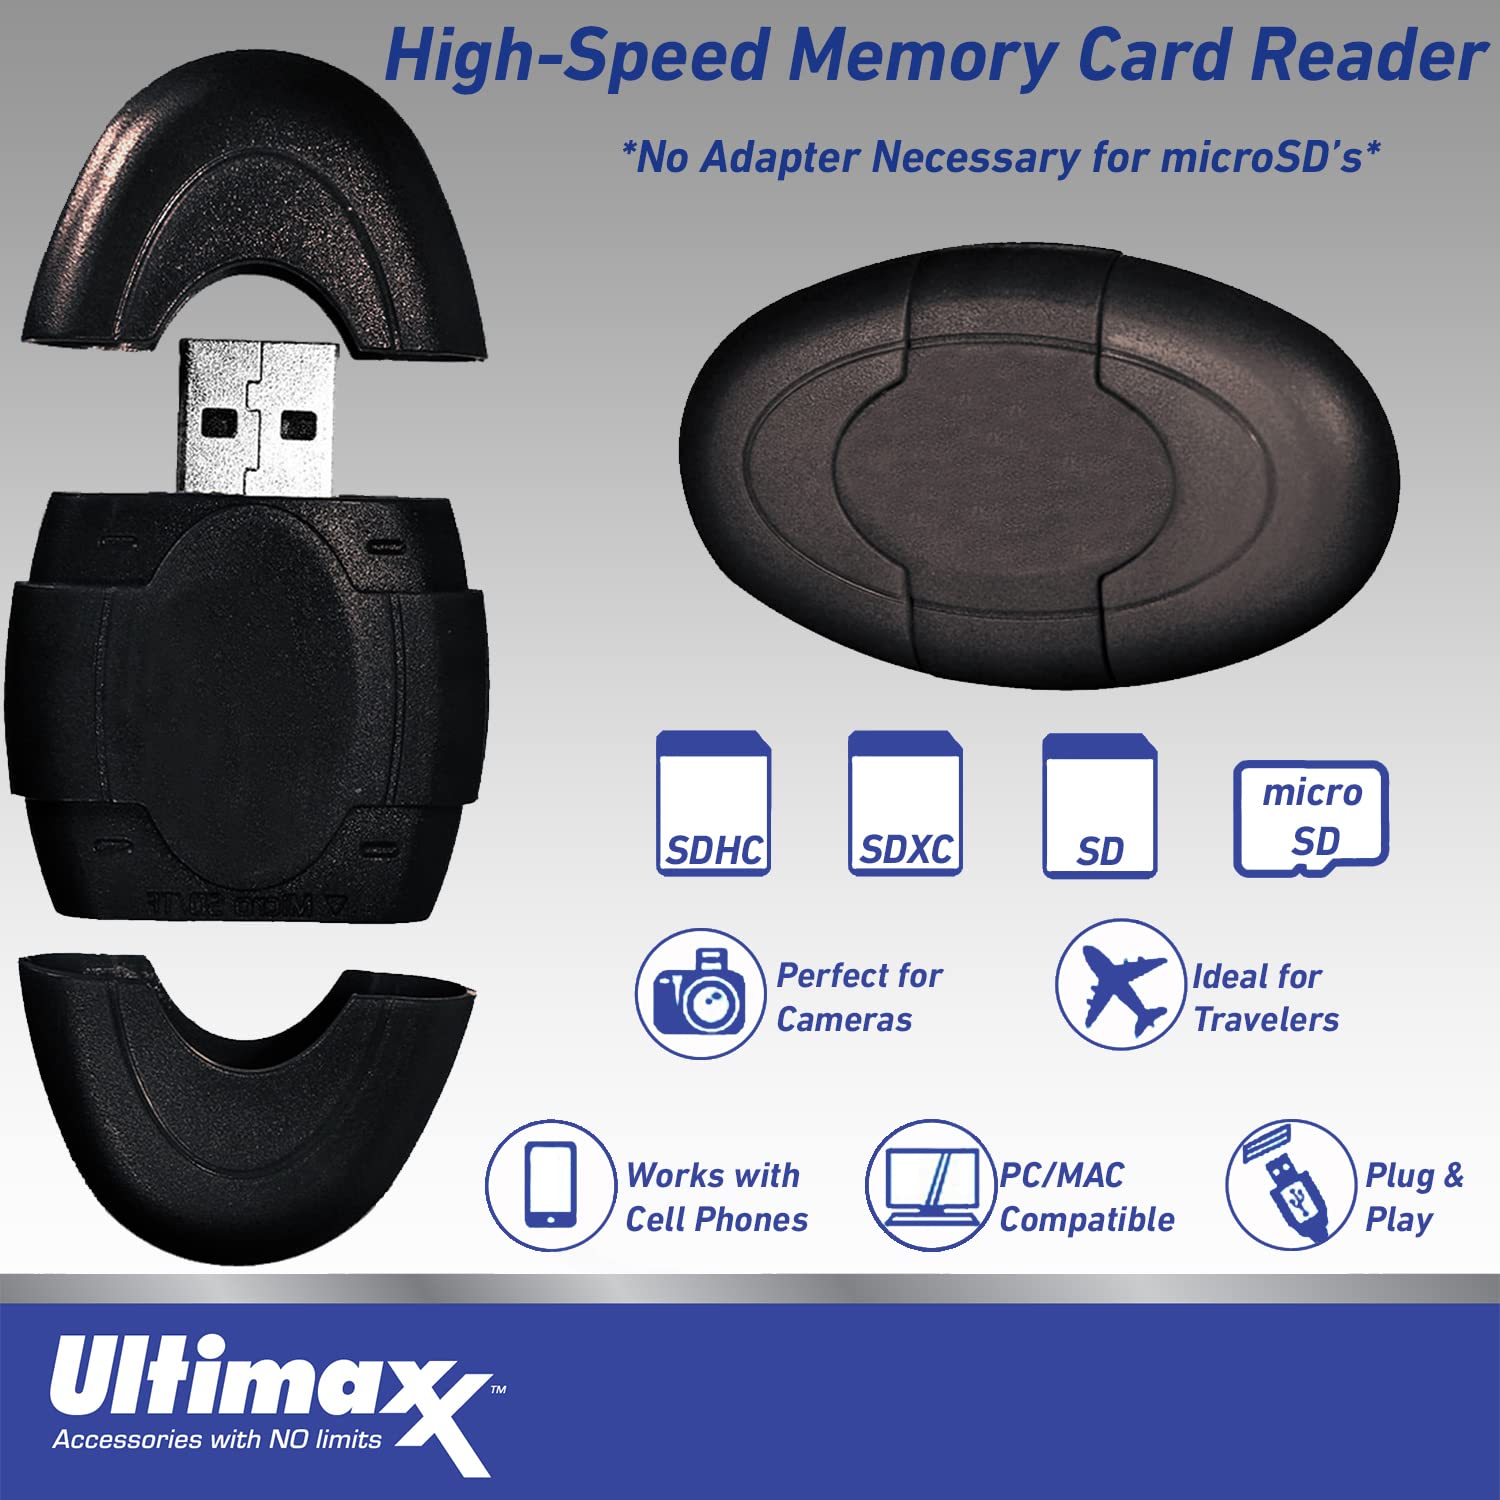 Ultimaxx Starter Bundle + FUJIFILM INSTAX Mini EVO Hybrid Instant Camera + SanDisk 32GB Ultra microSD Memory Card, High Speed Memory Card Reader, Manufacturer’s Accessories & More (8pc Bundle)